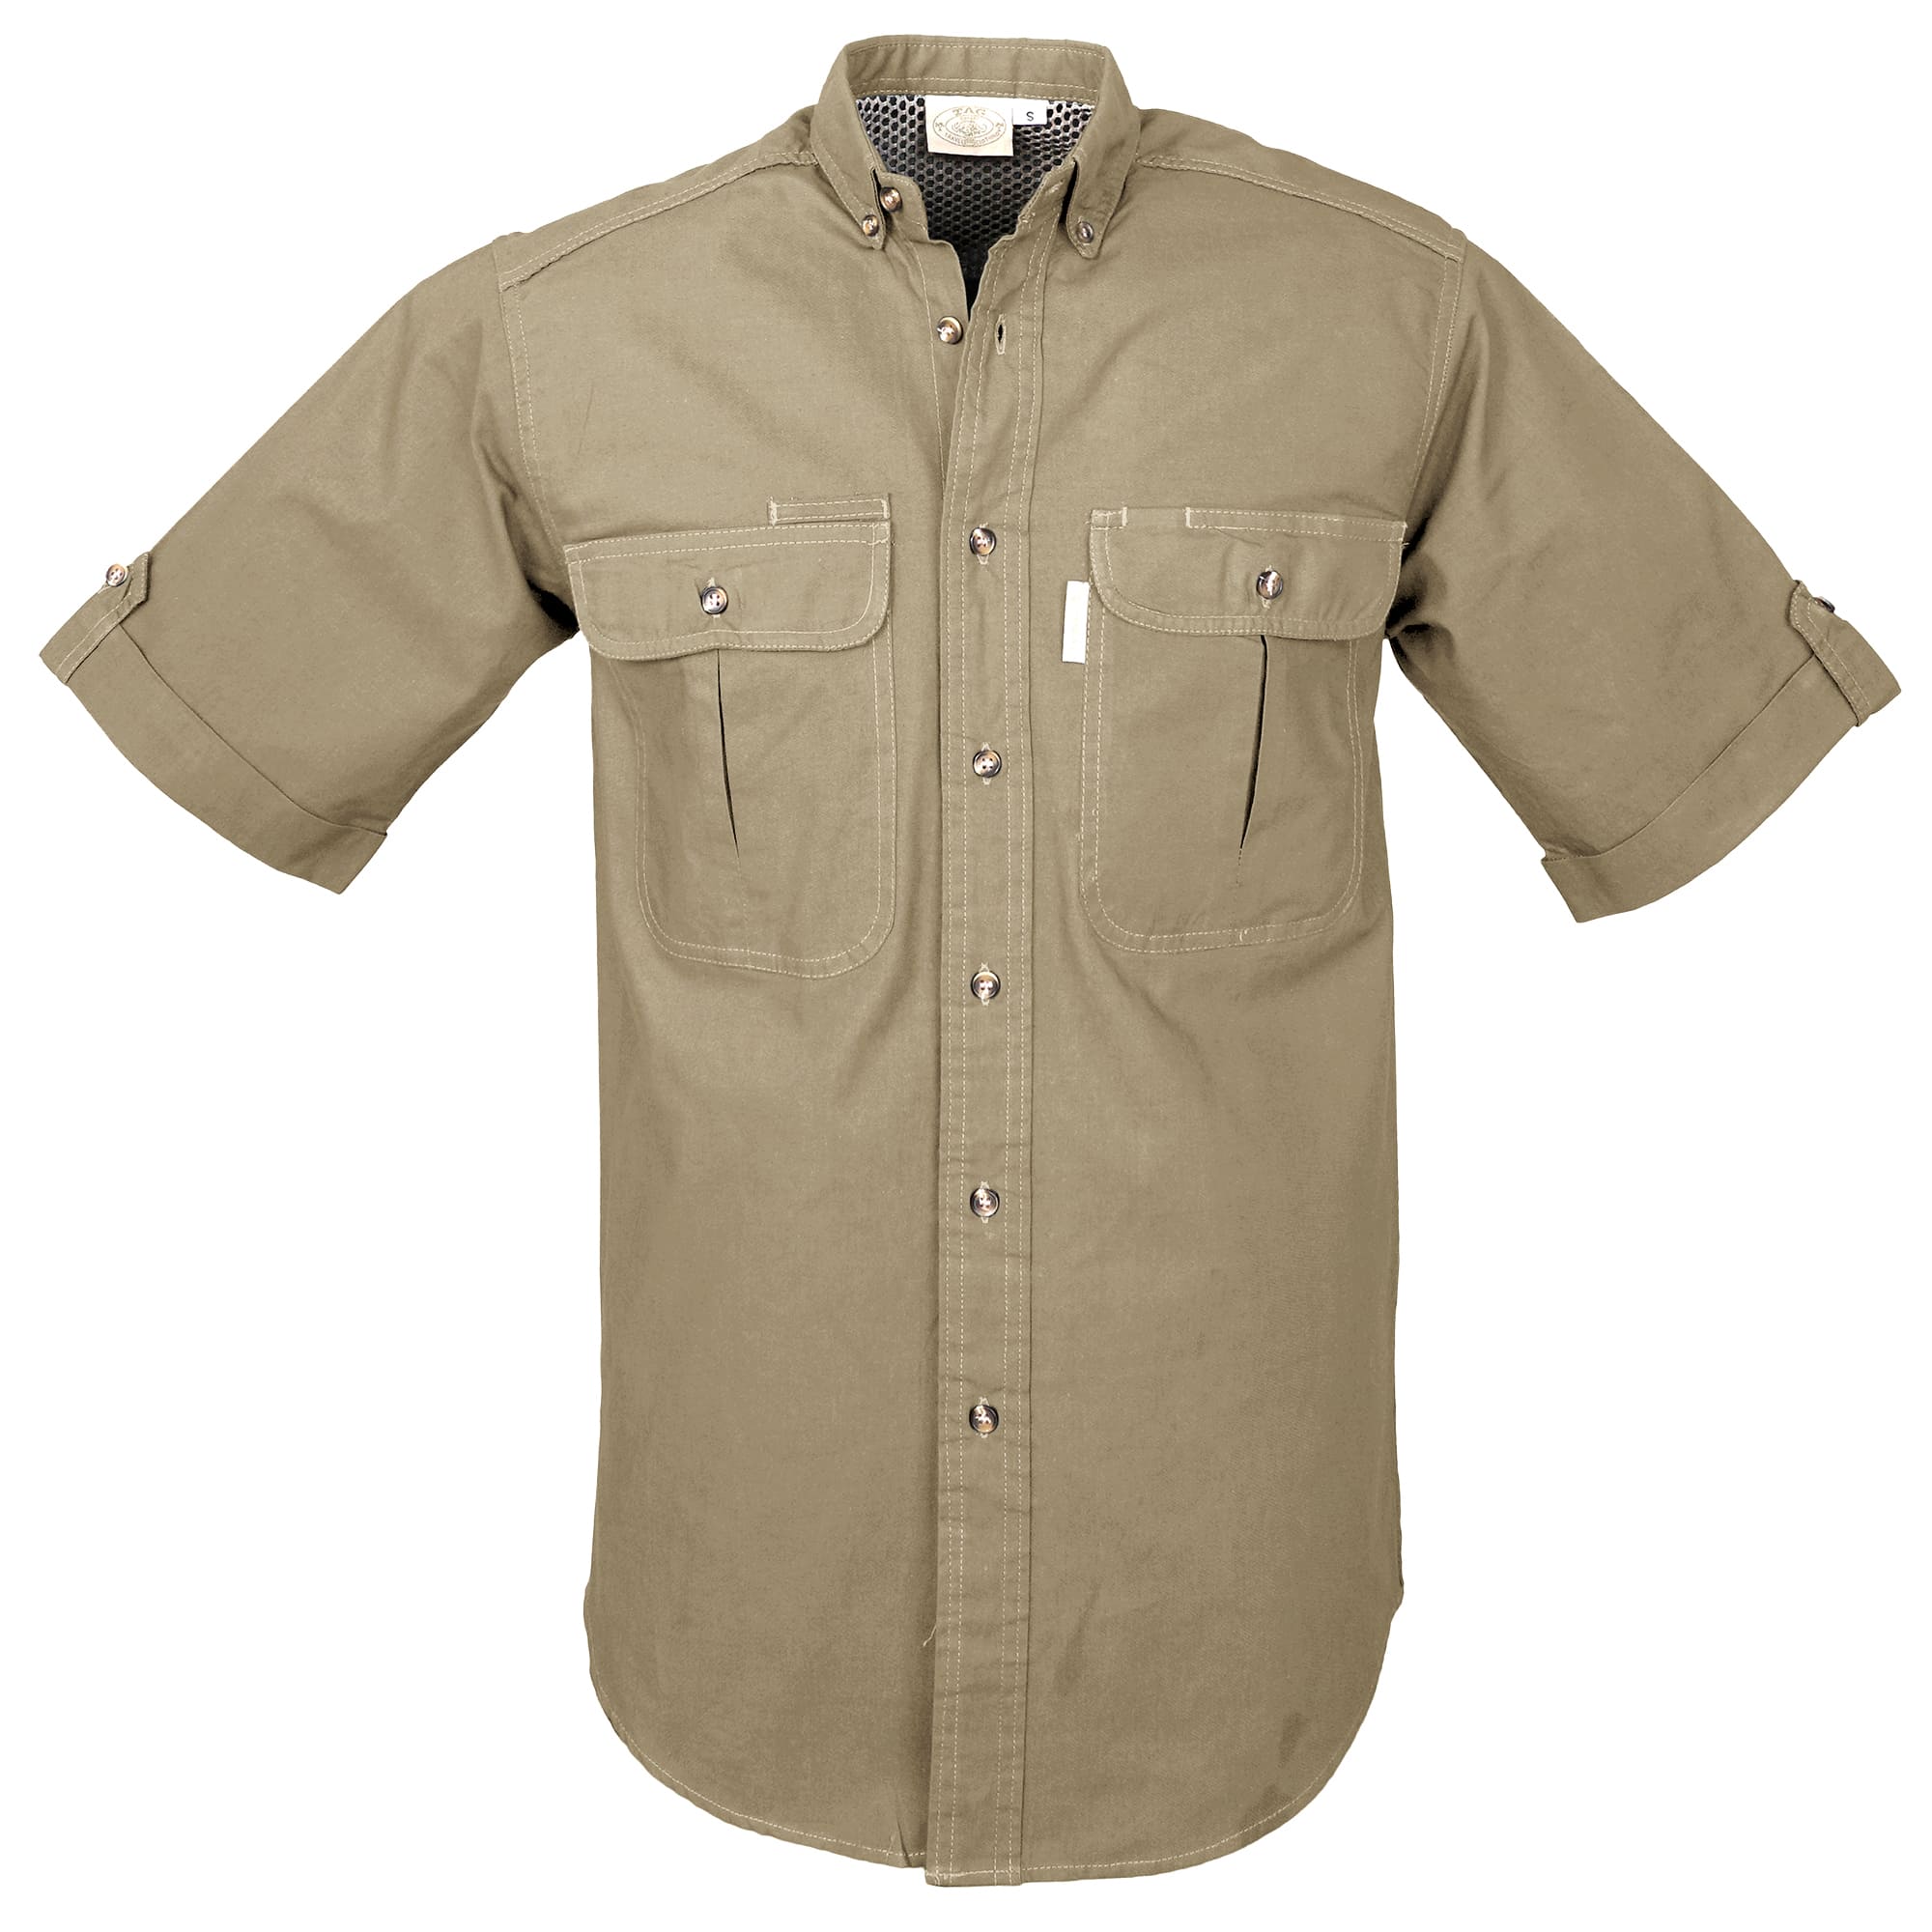 Men's Safari Adventure Shirt -Short-Sleeve Khaki / Medium